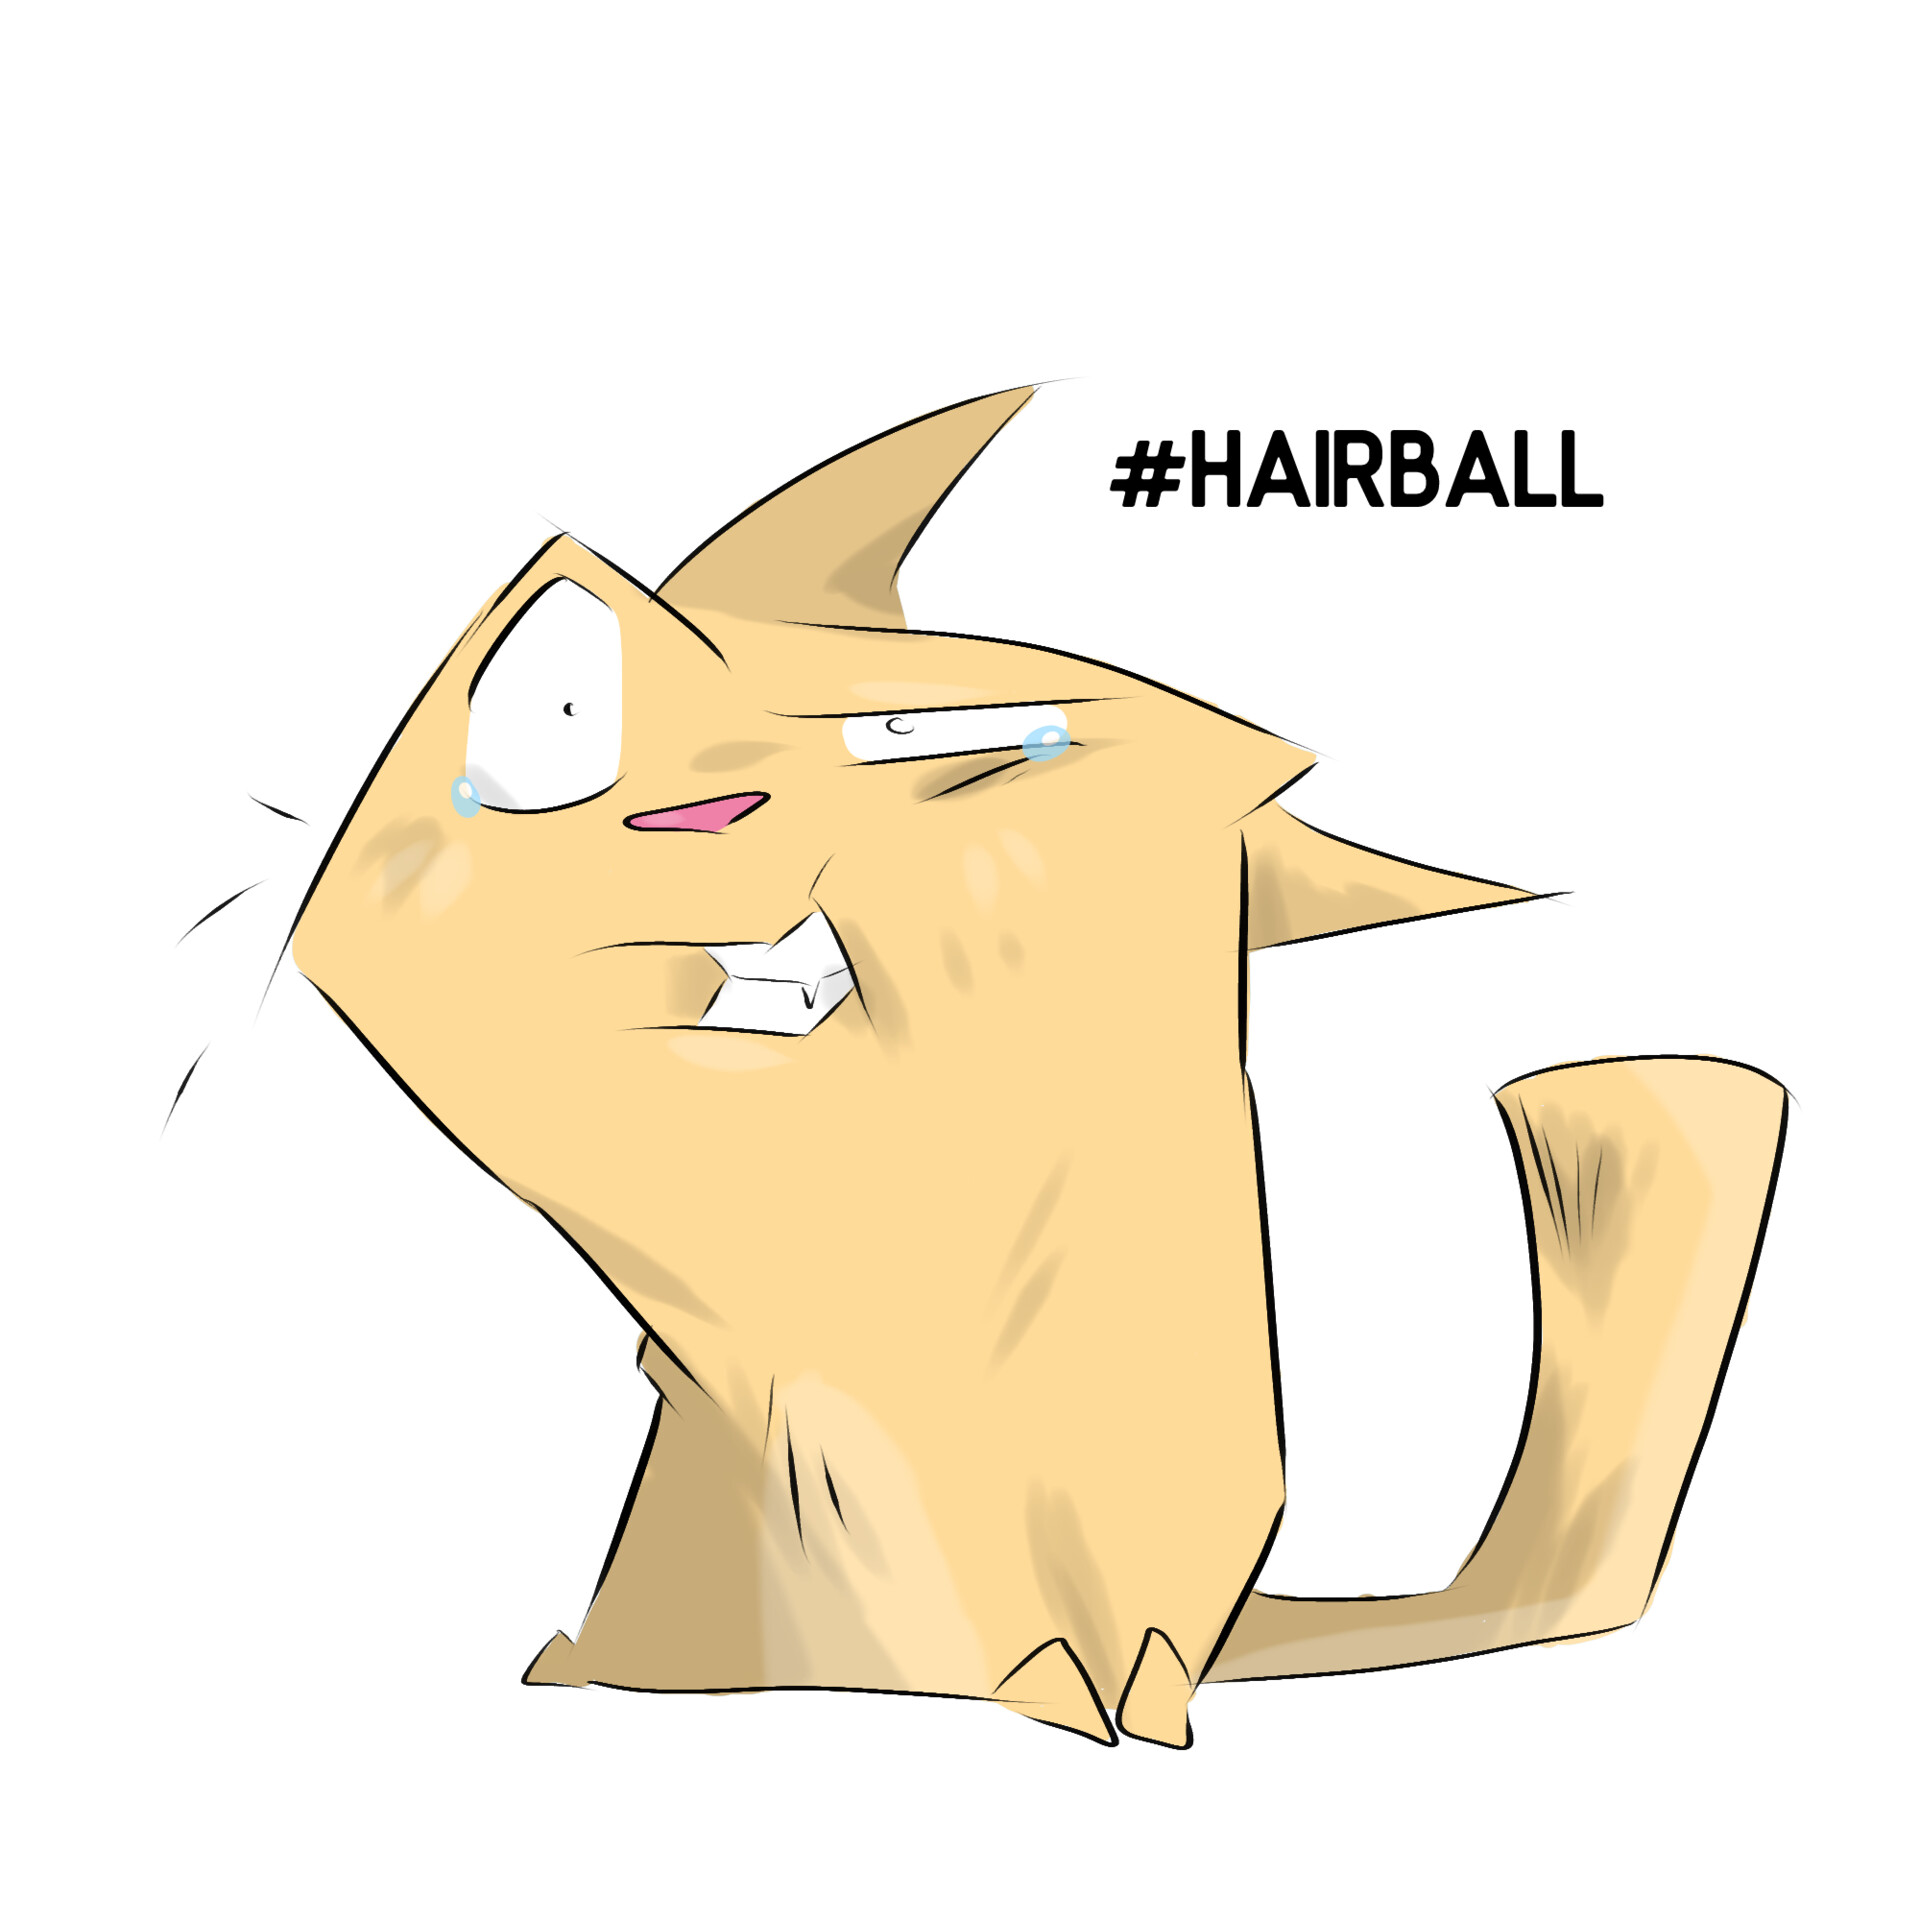 Hairball. Illustration by Matt Moriarty